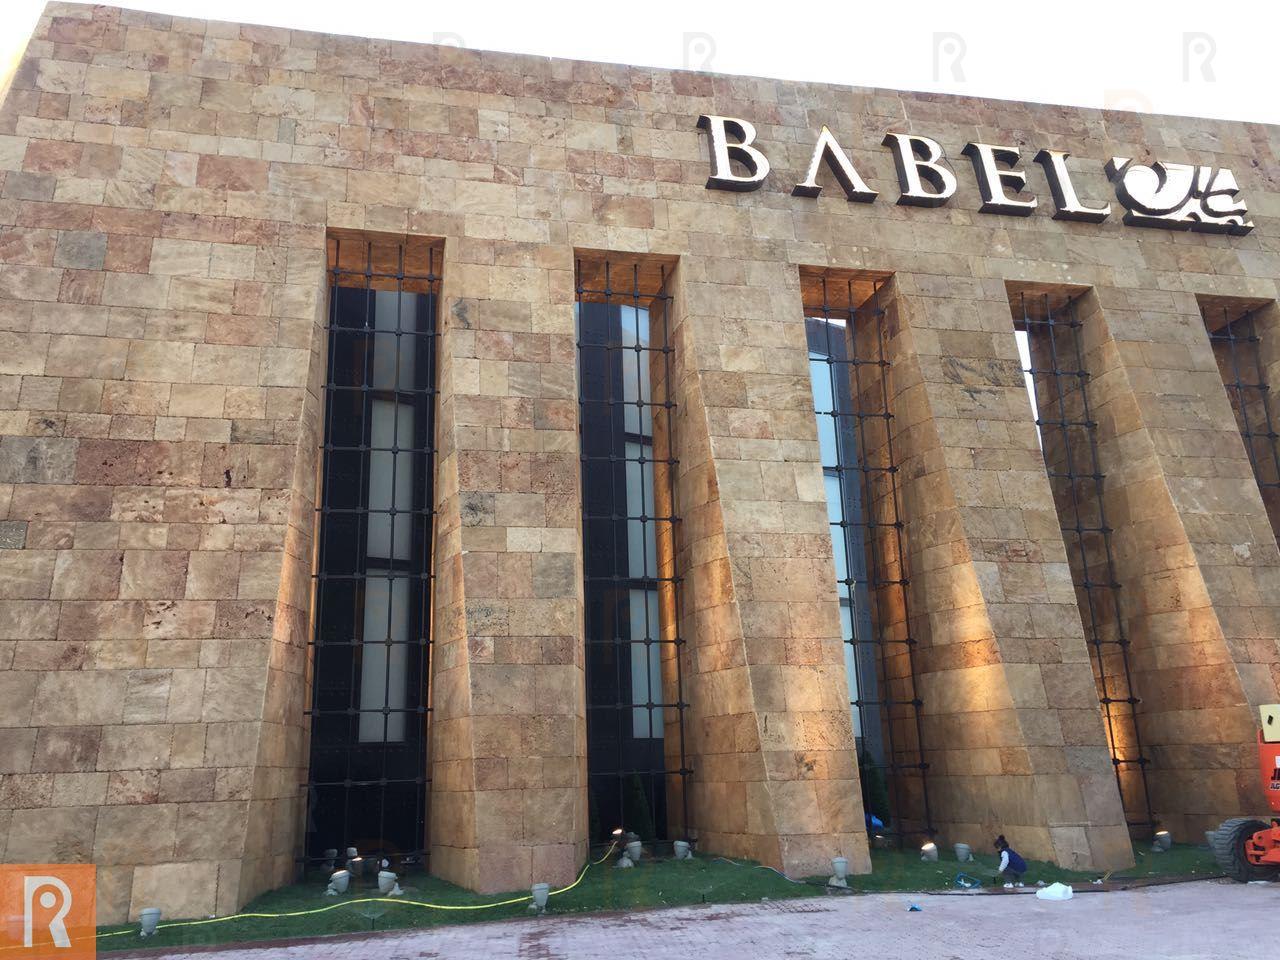 Babel Lebanese Restaurant now in Kuwait